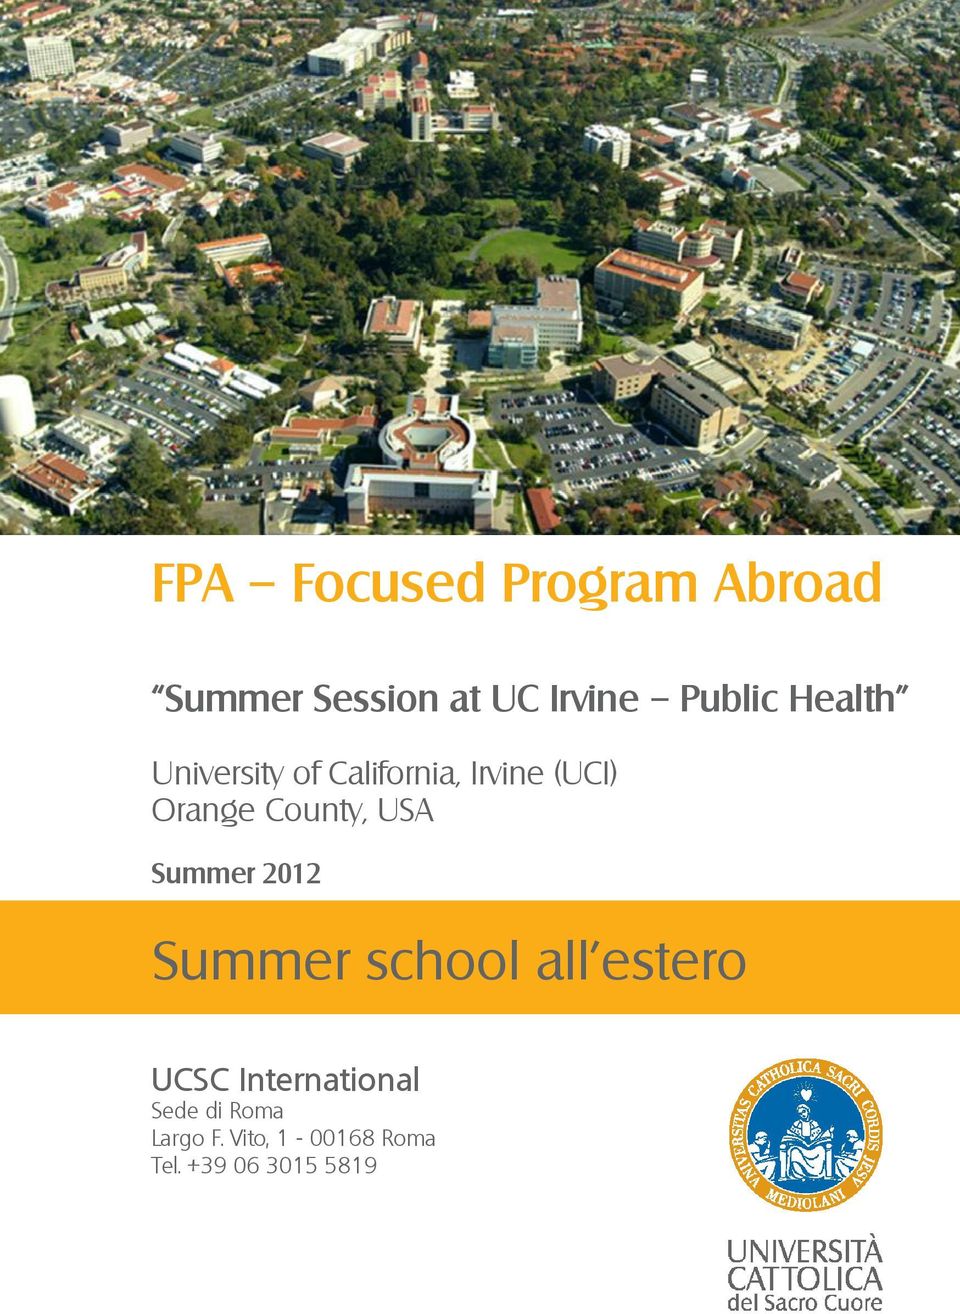 2012 Summer school all estero UCSC International